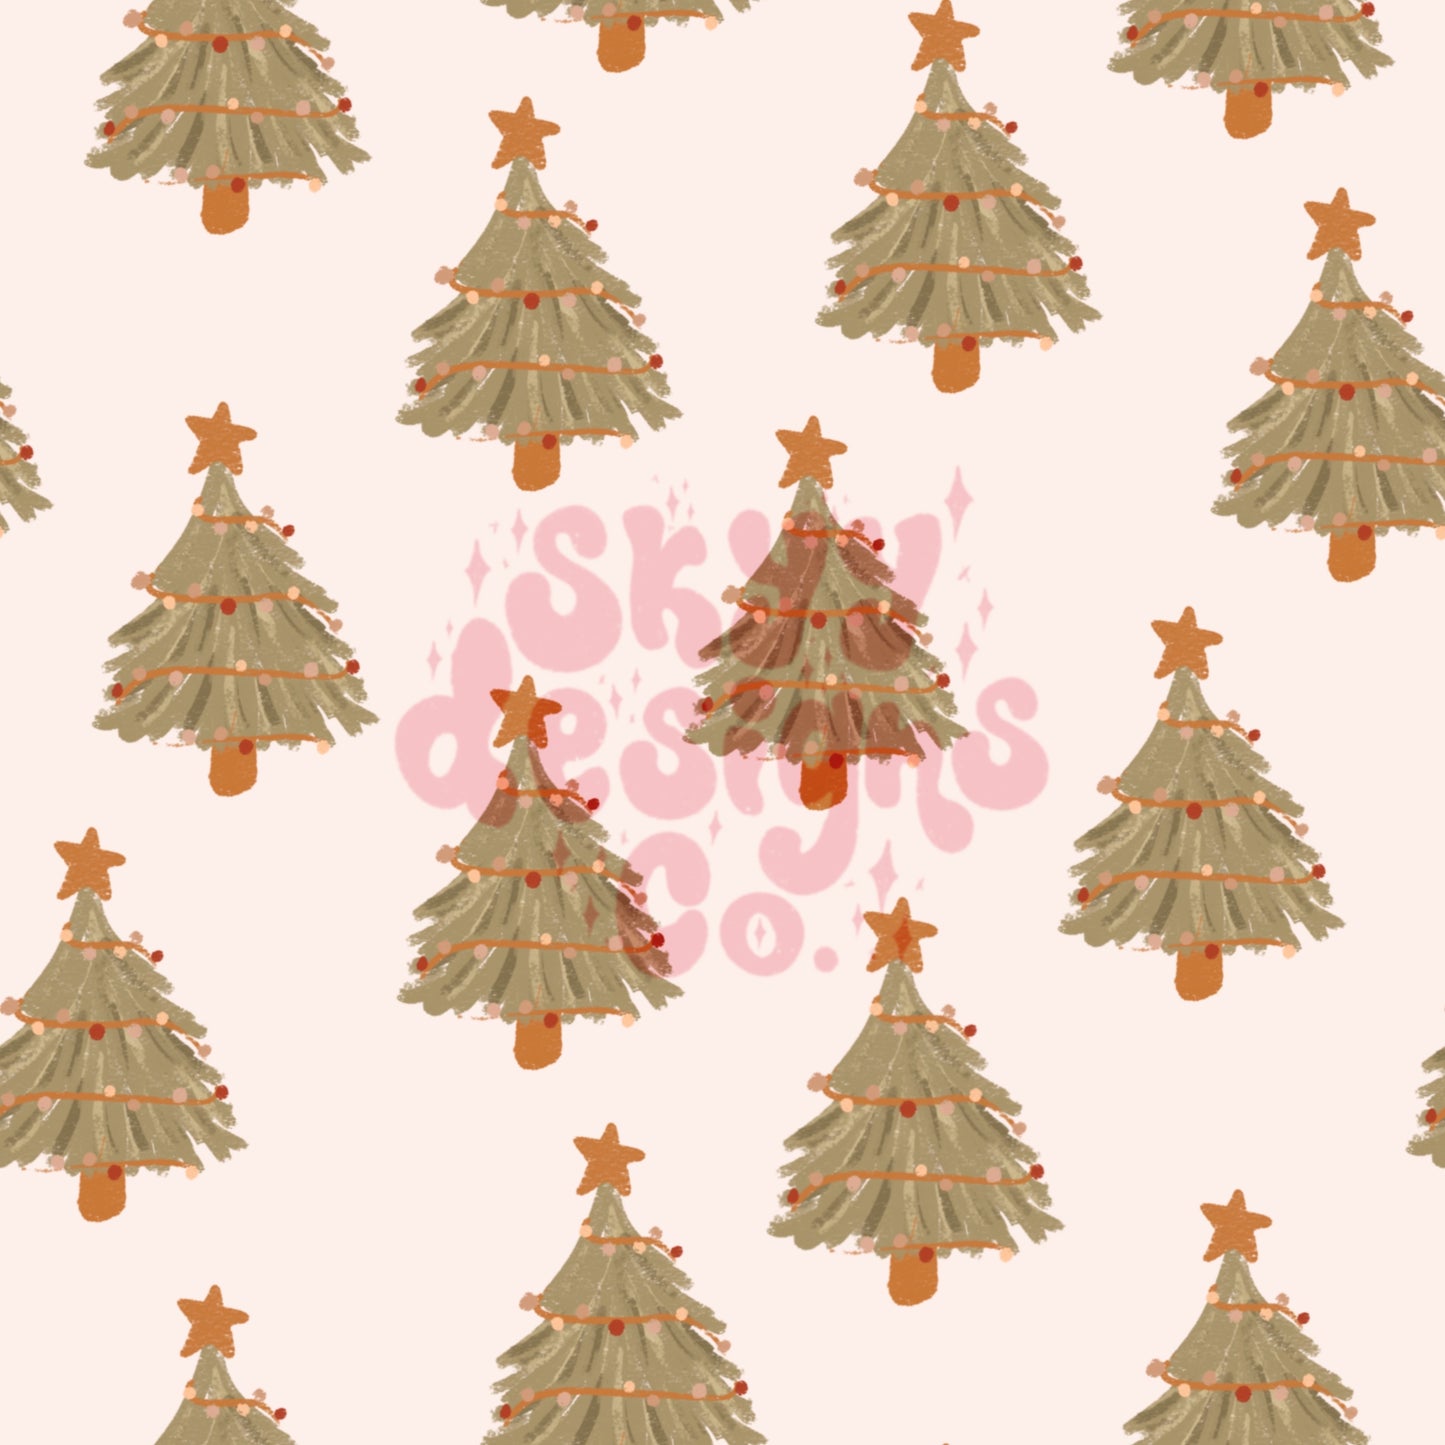 Textured Christmas tree pattern design